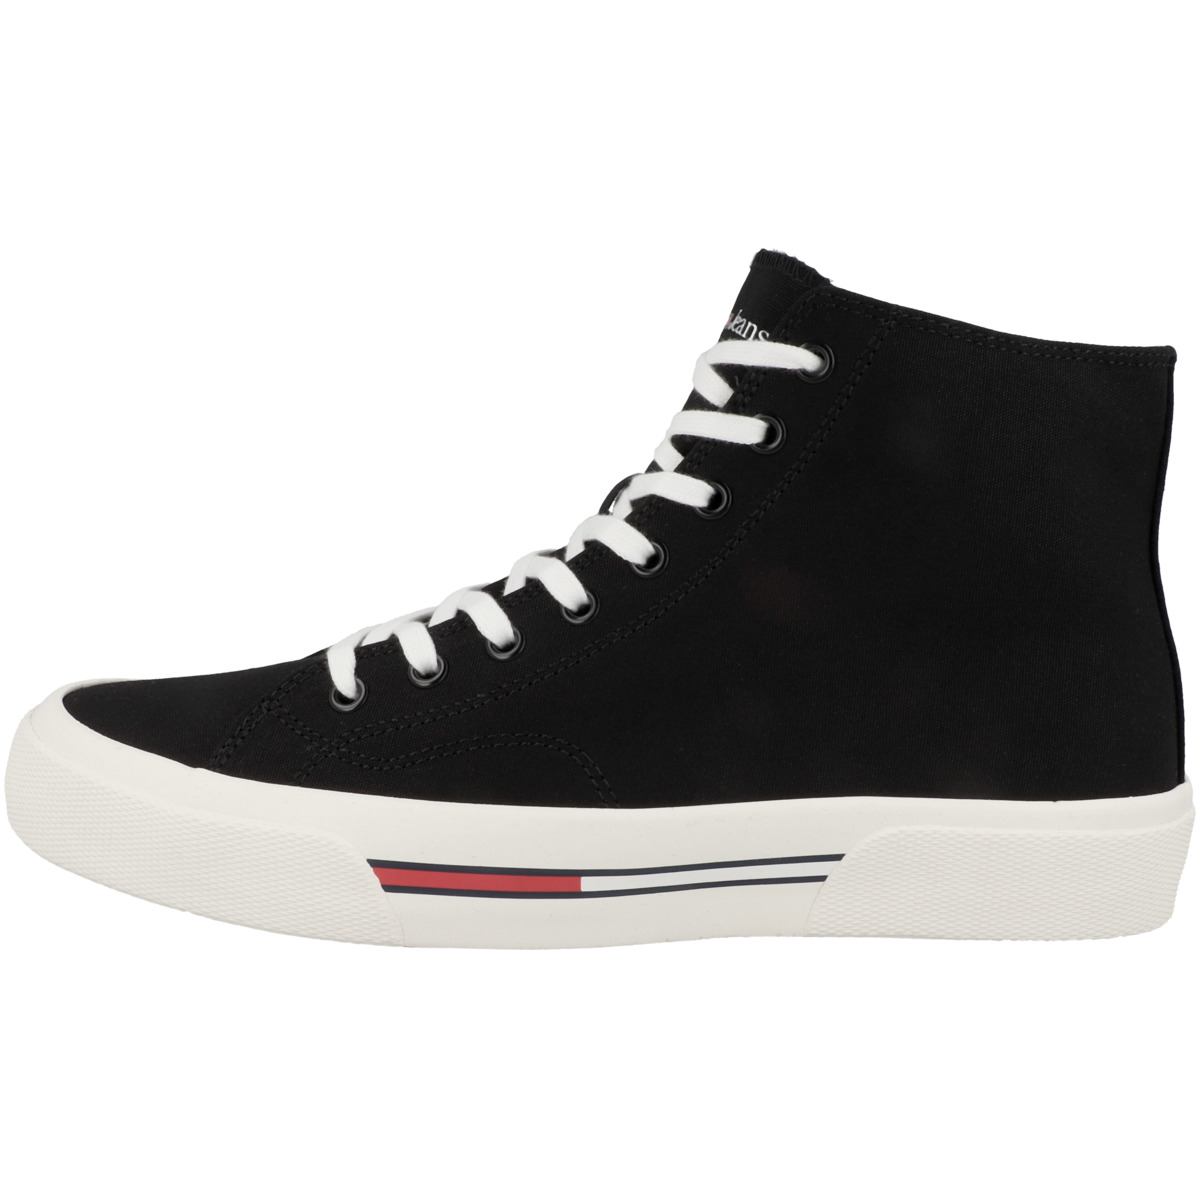 Высокие кроссовки Tommy Hilfiger mid Tommy Jeans Mid Canvas Color, черный кроссовки skate canvas mid tommy jeans белый